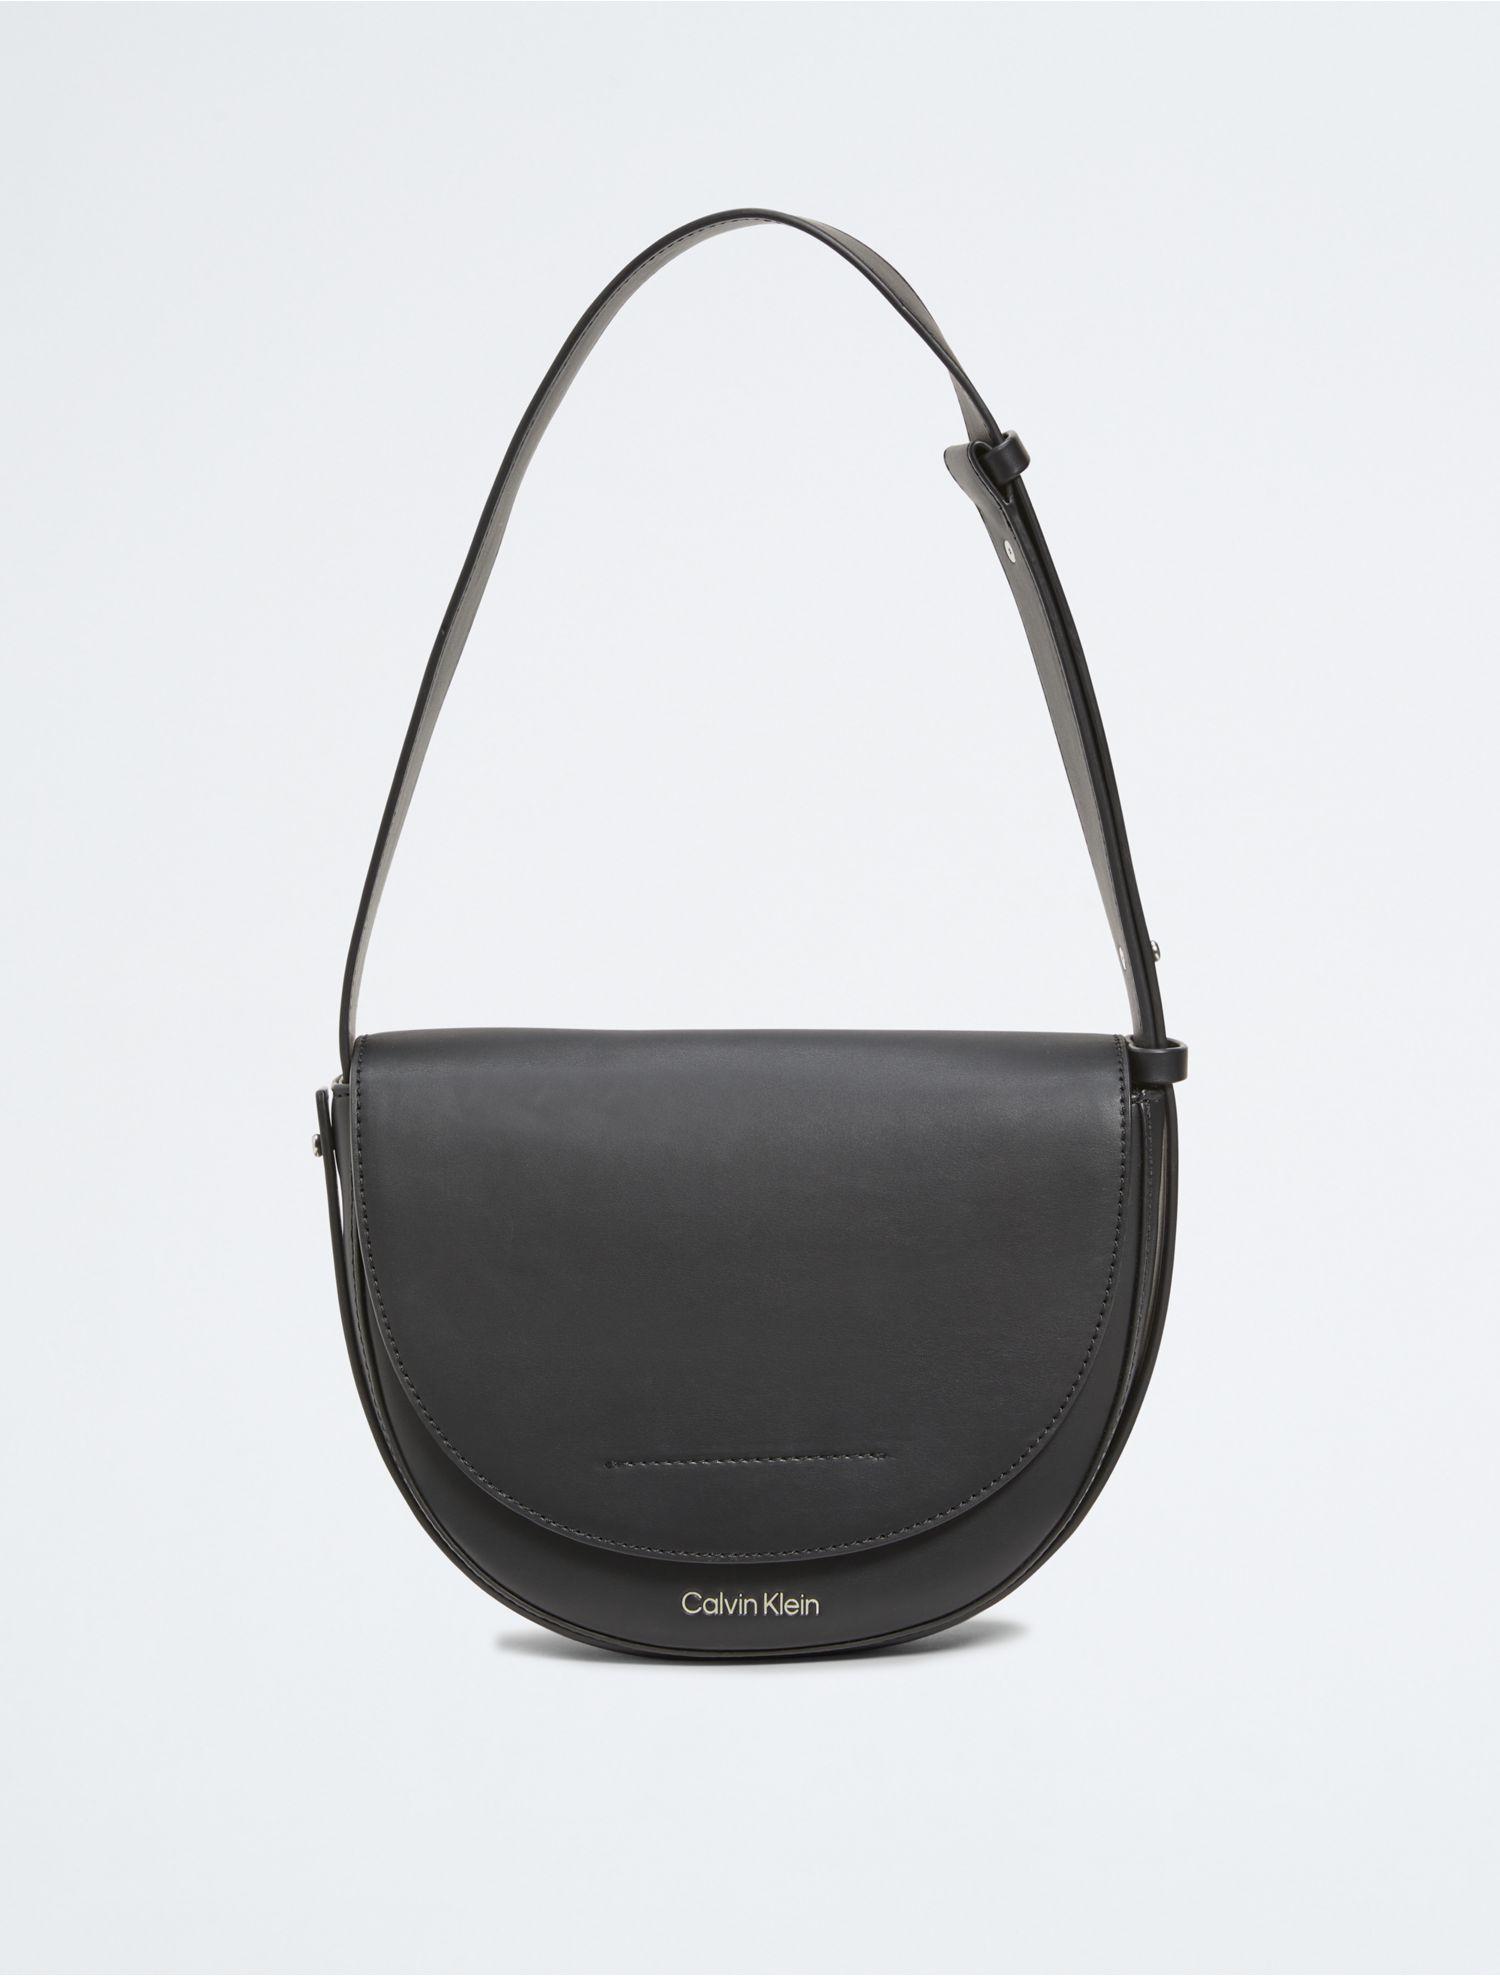 Calvin Klein Elemental Saddle Bag in Black | Lyst